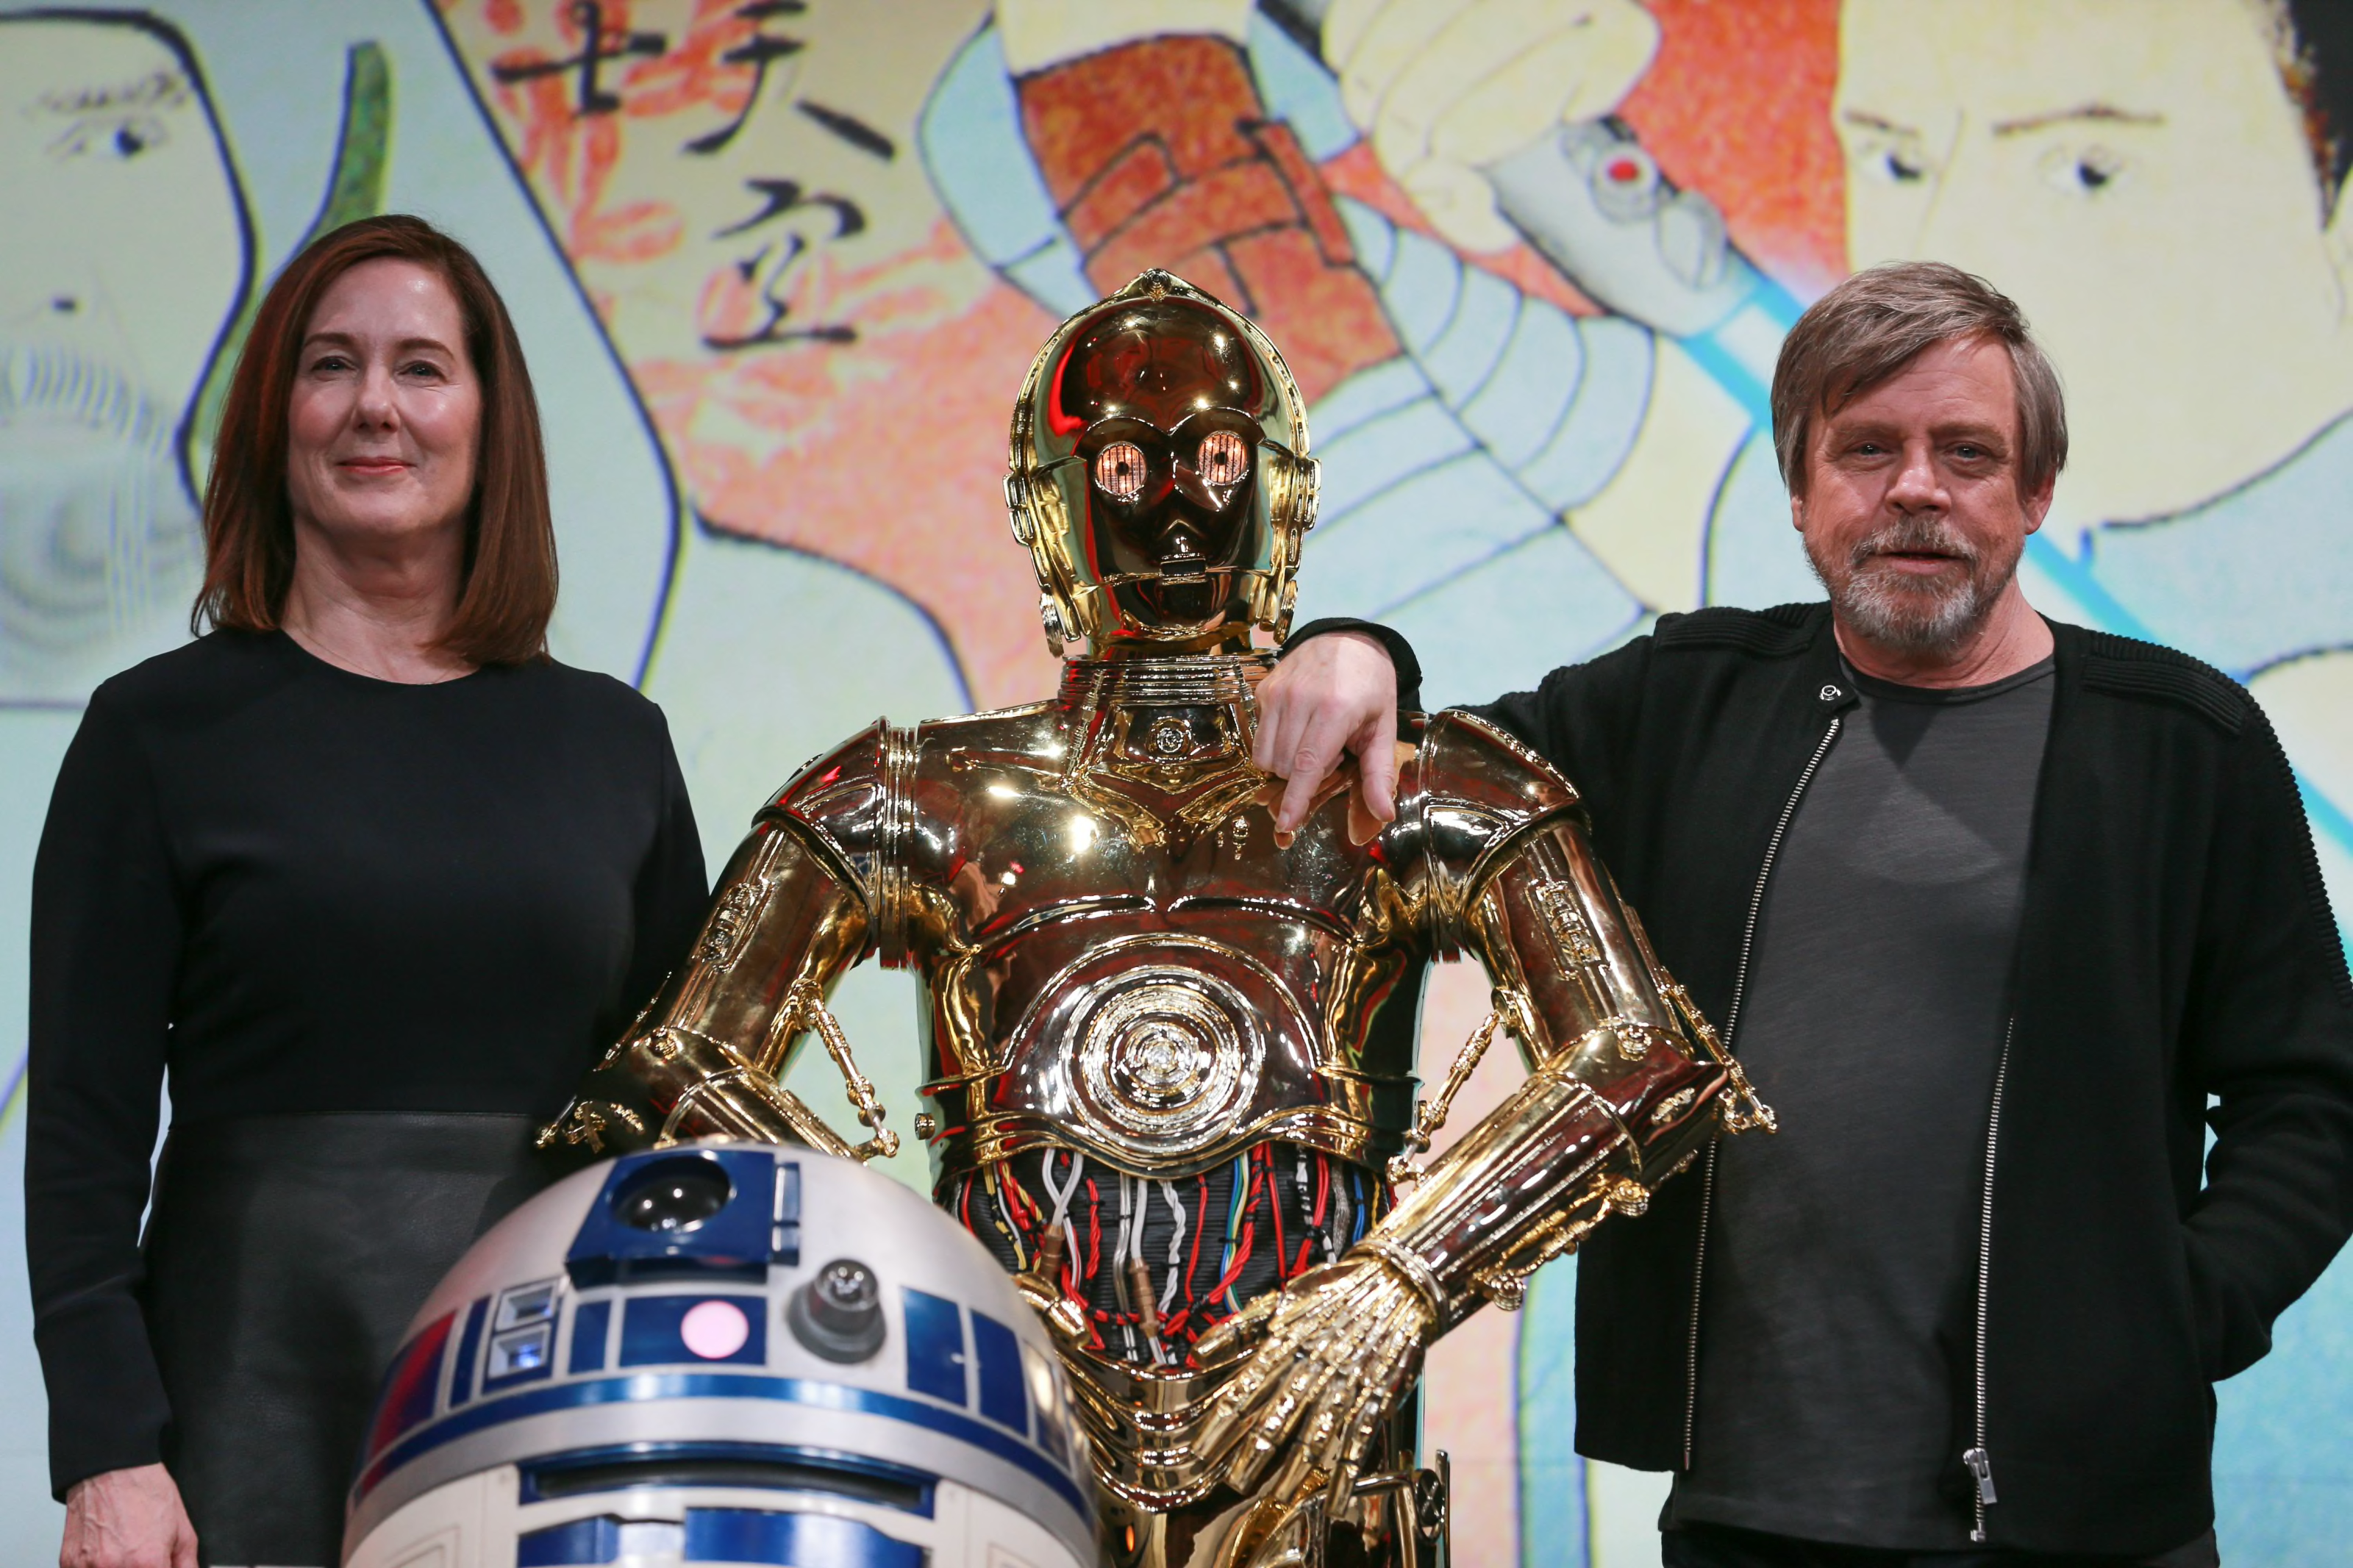 Rian Johnson's Star Wars Trilogy Not Dead Yet: Lucasfilm Meetings